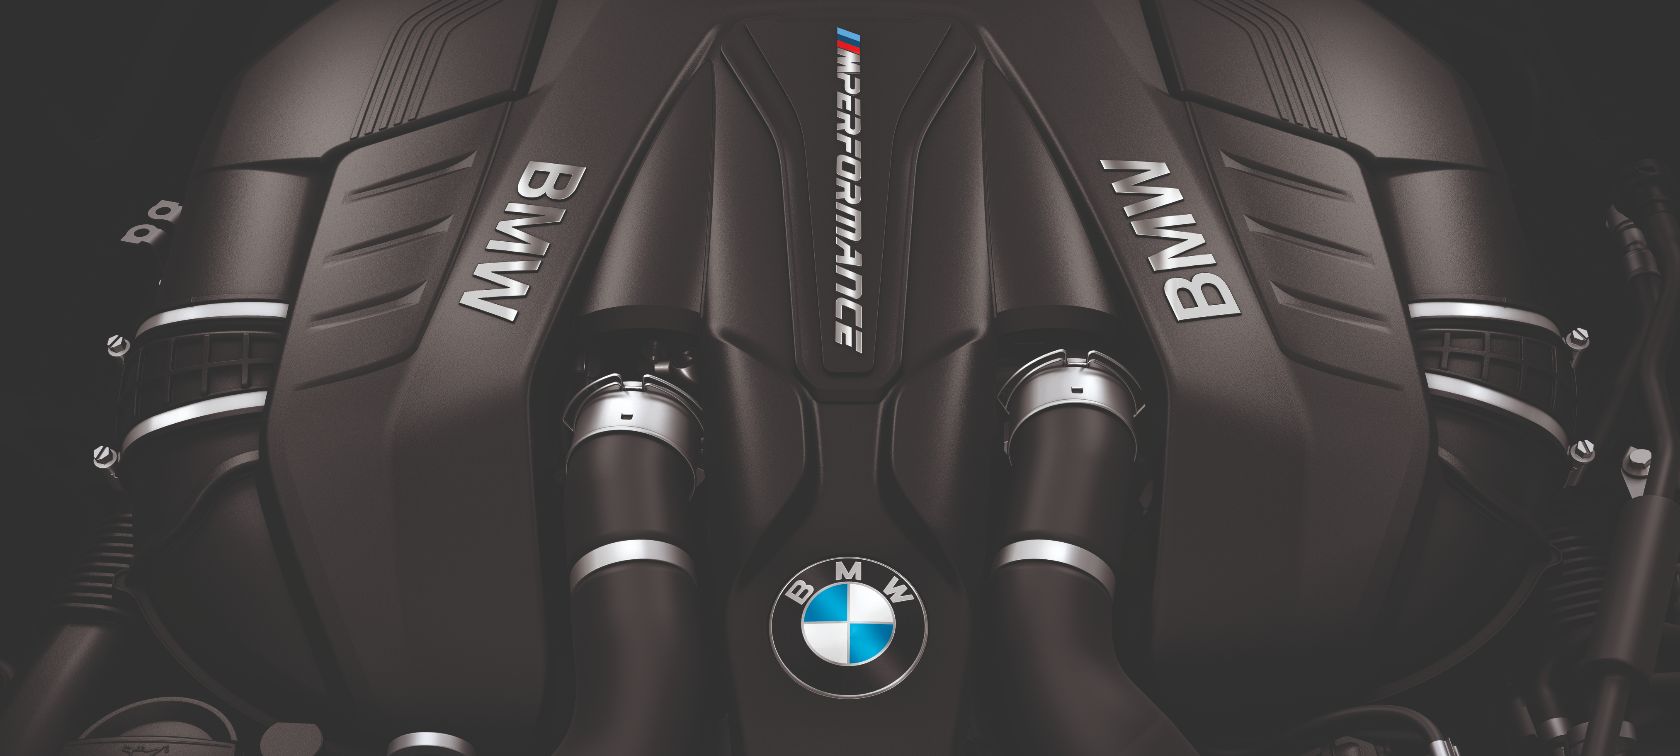 ORGINALNE ROZRZĄDY BMW - BMW M-CARS GROUP